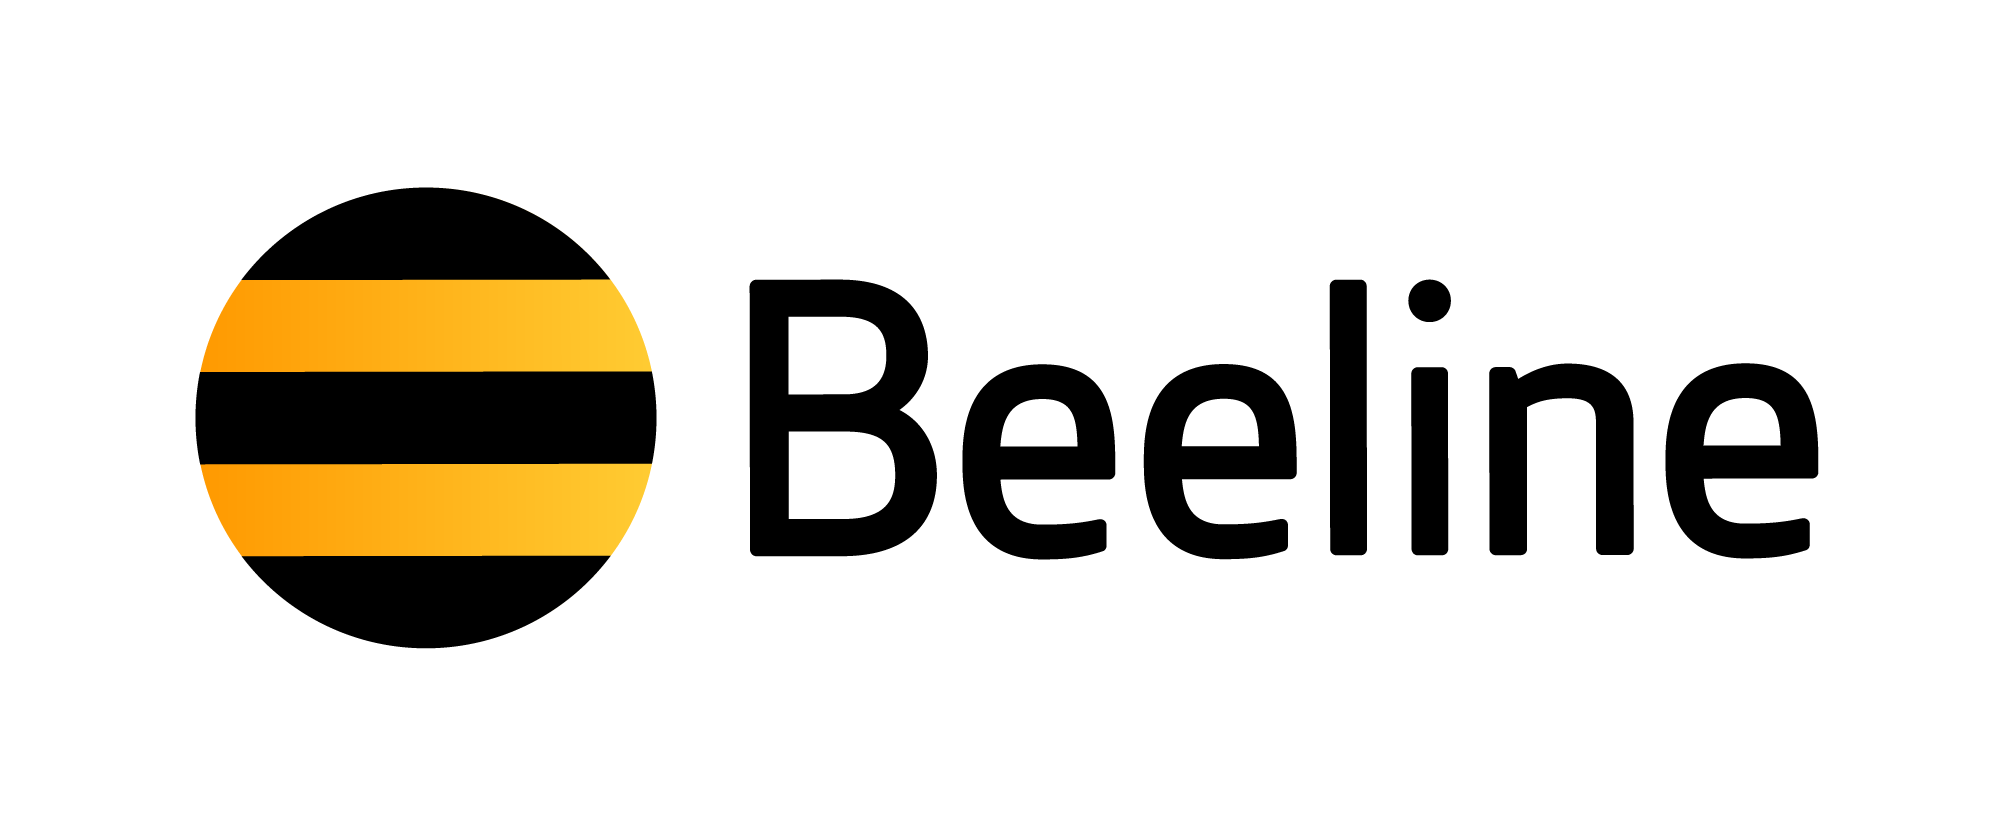 Логотип Билайн на желтом фоне